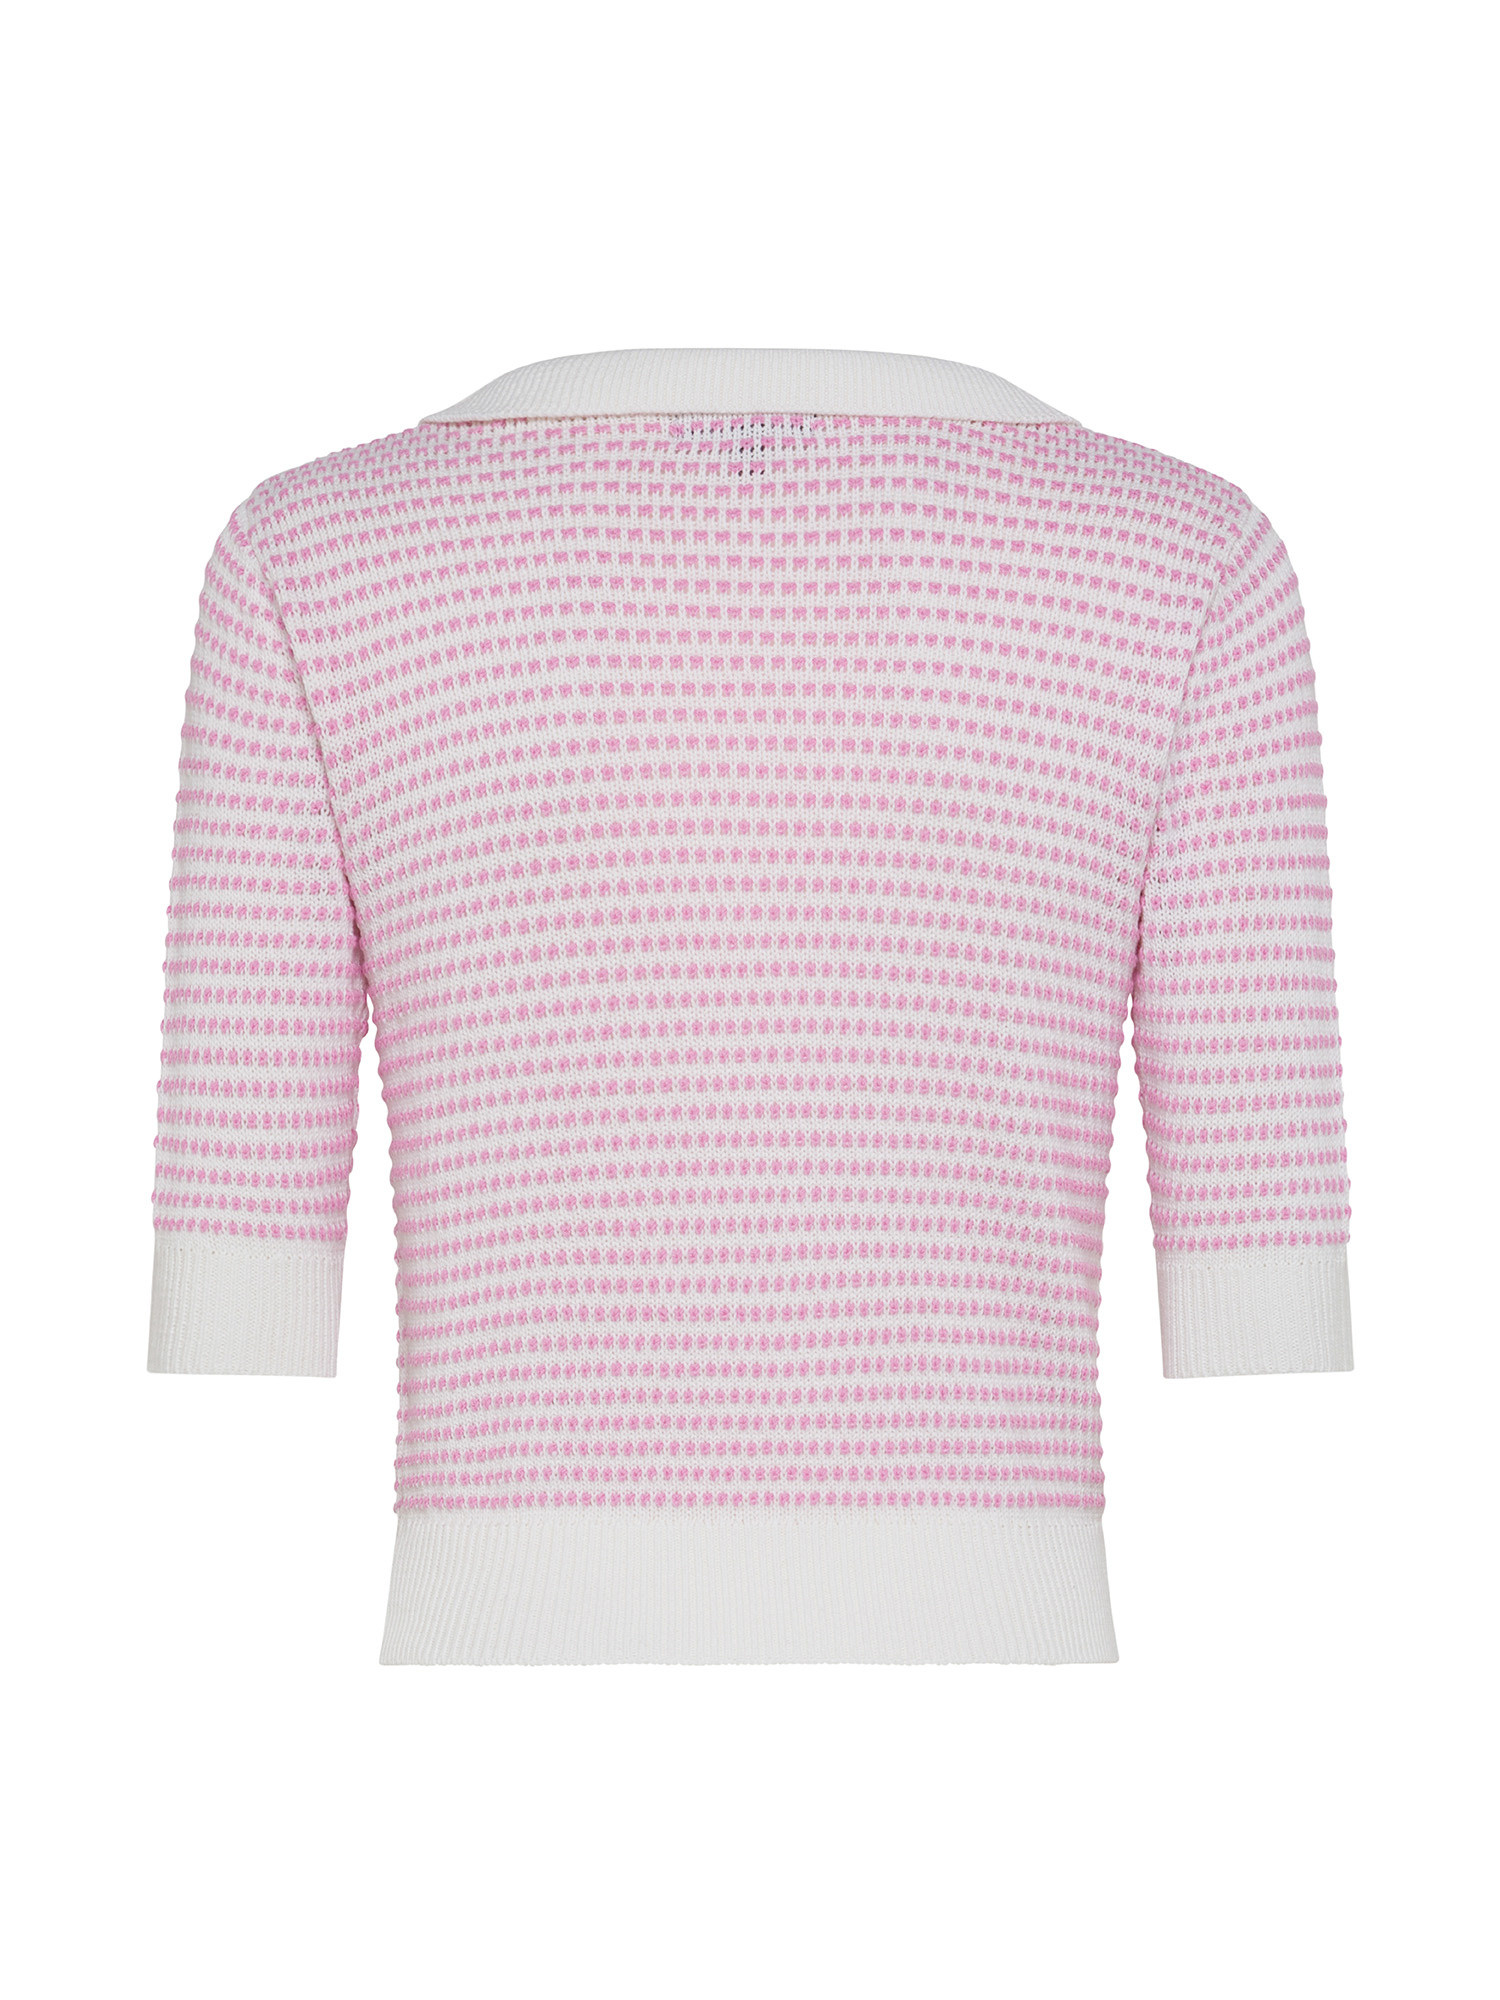 Koan - Short two-tone sweater, Pink, large image number 1